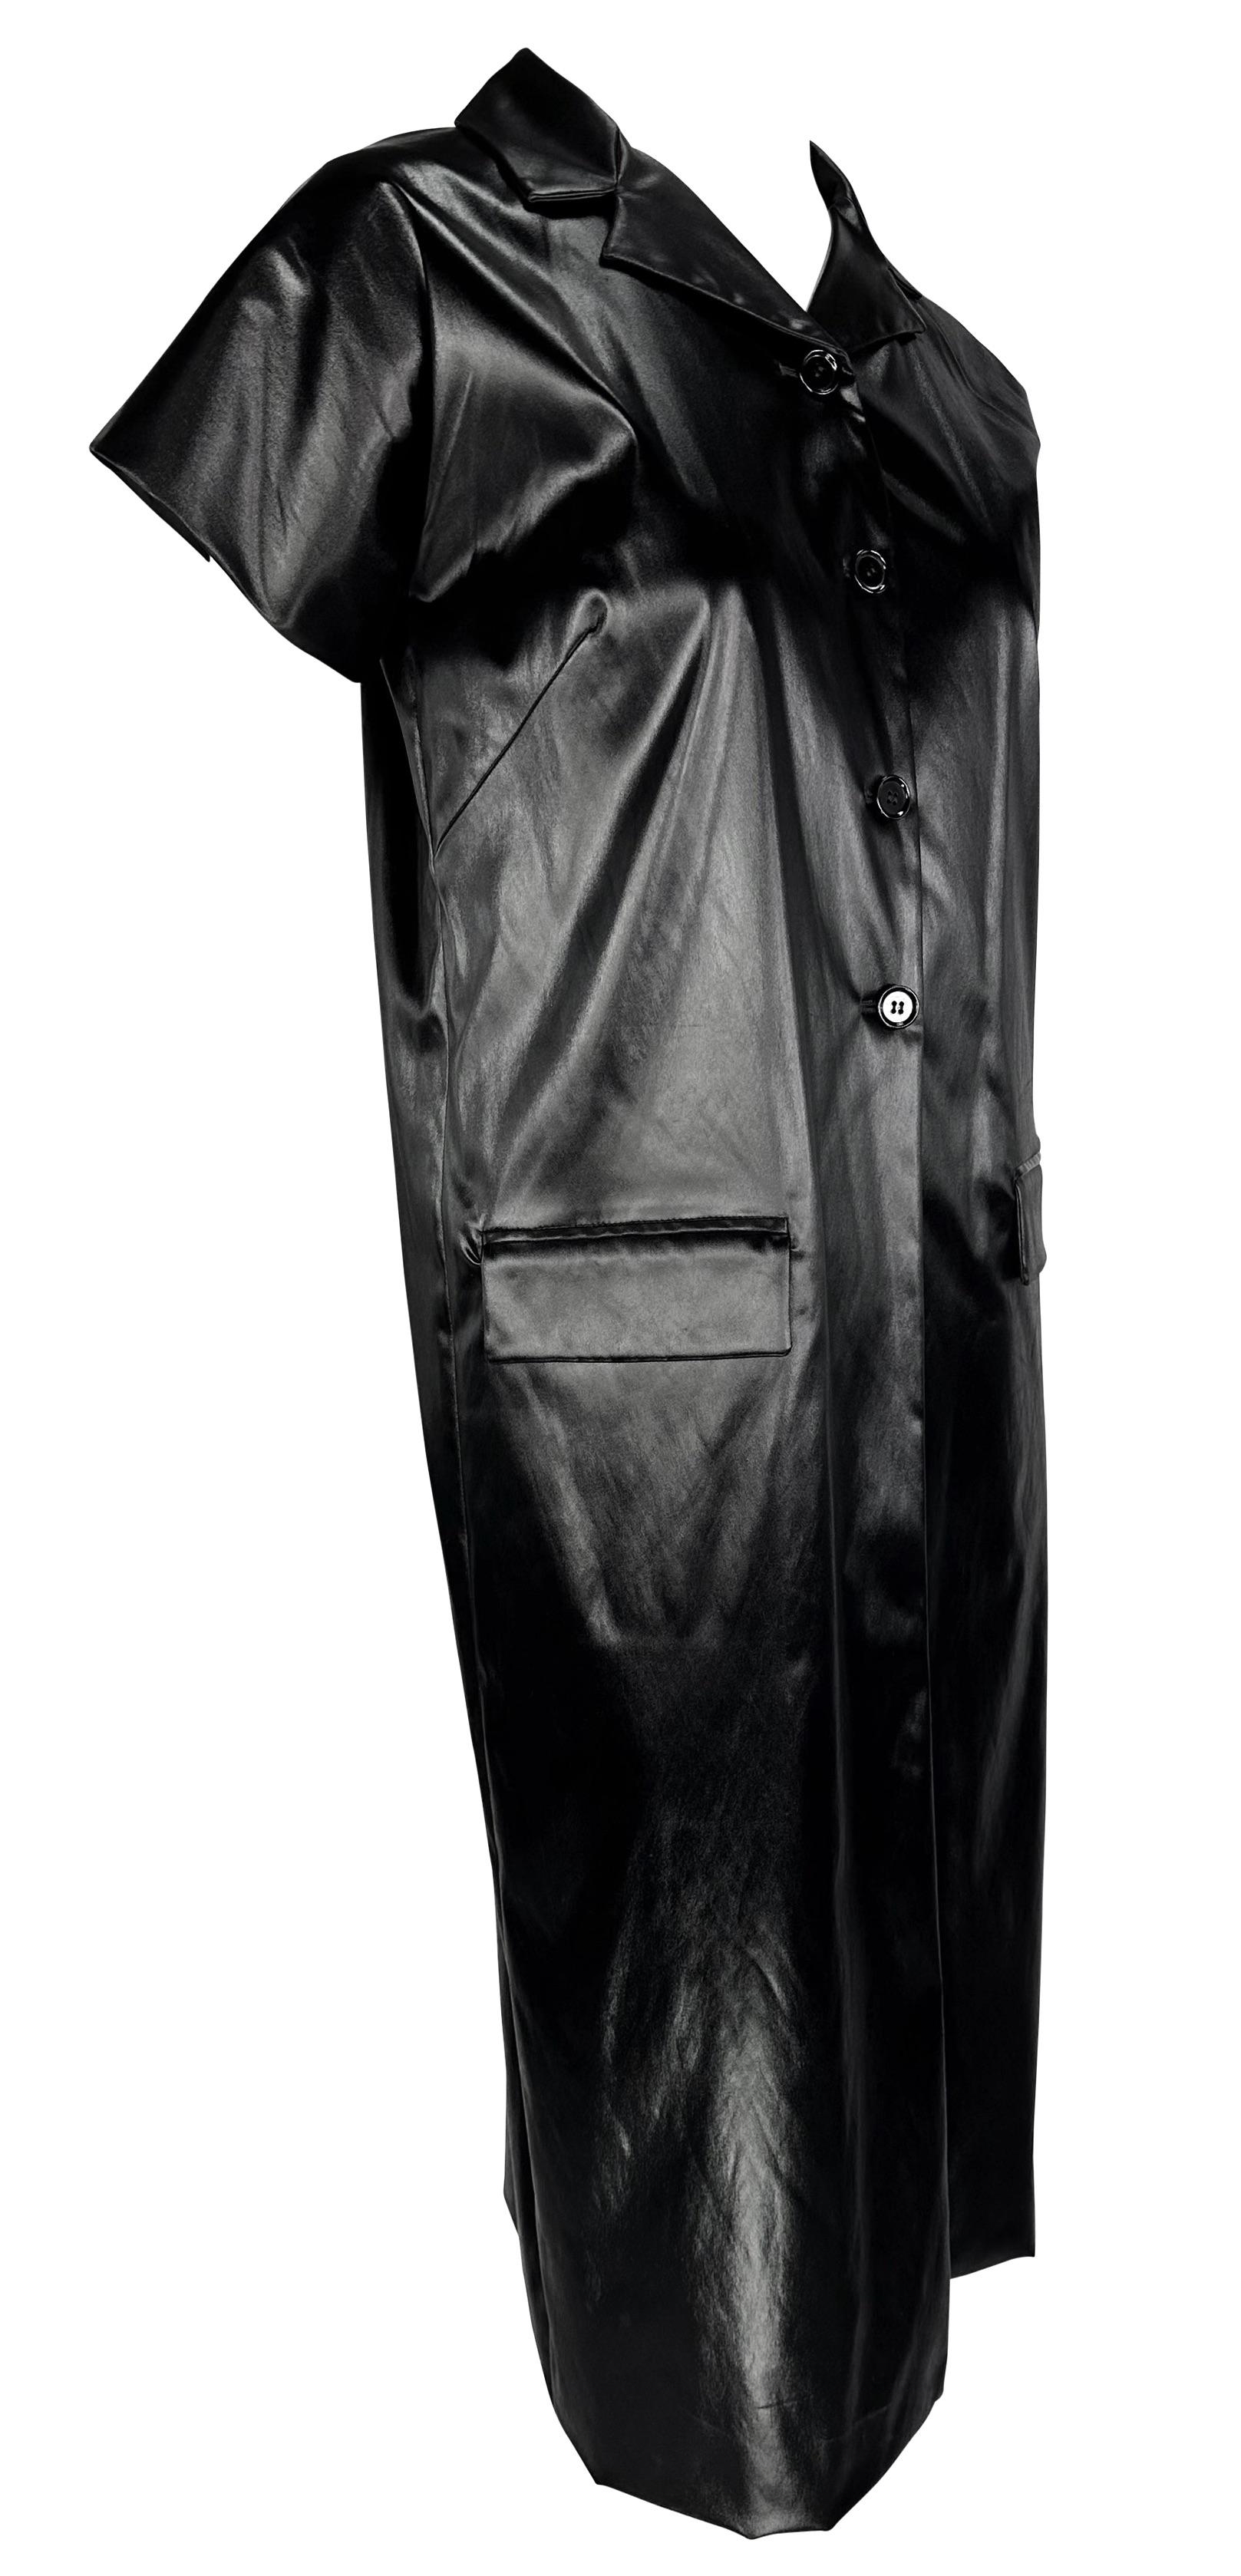 S/S 1999 Dolce & Gabbana Runway Wet Look Stretch Black Coat Dress Short Sleeve For Sale 4